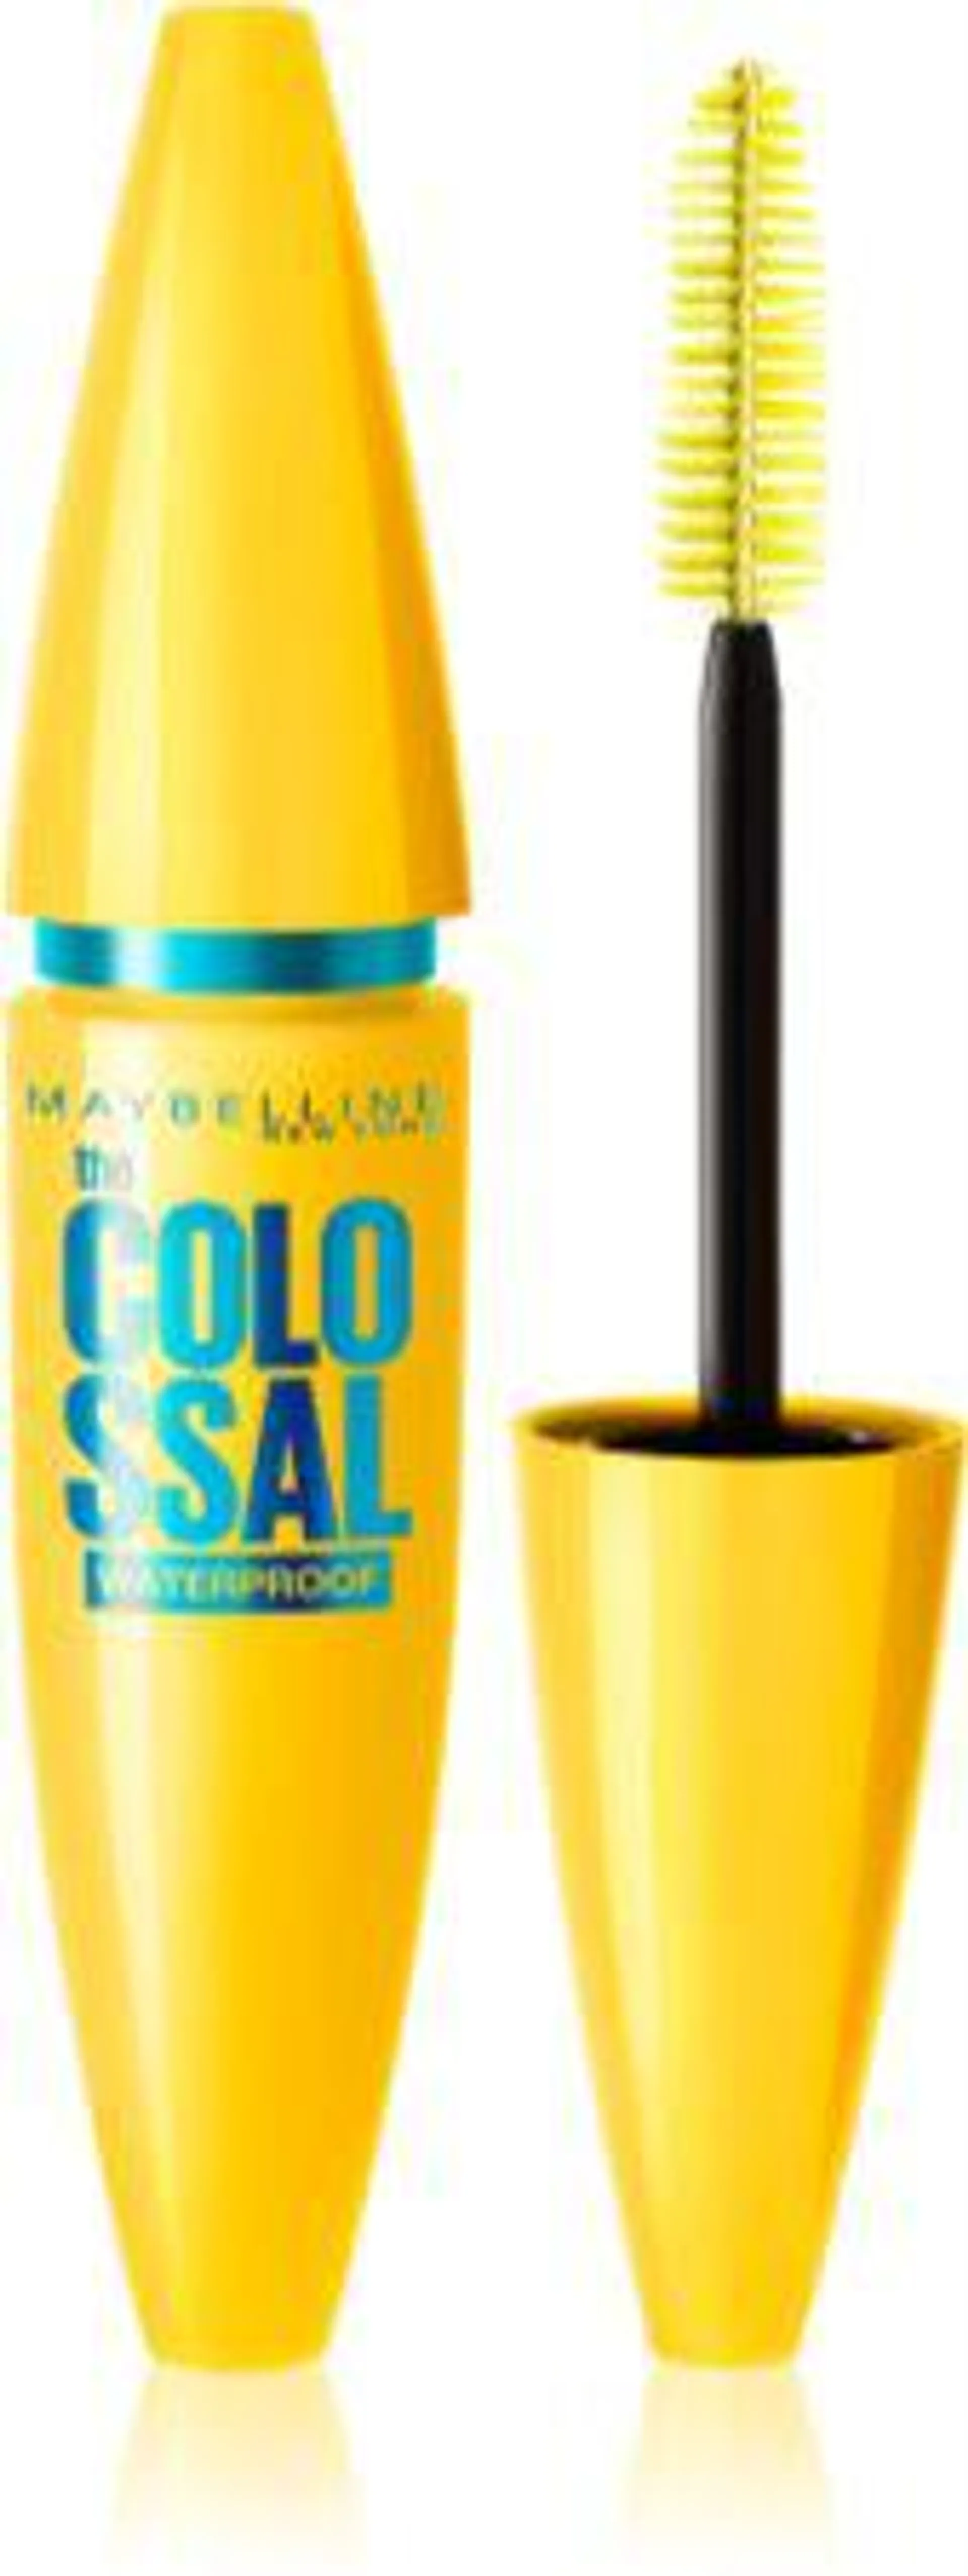 Waterproof Mascara for volume